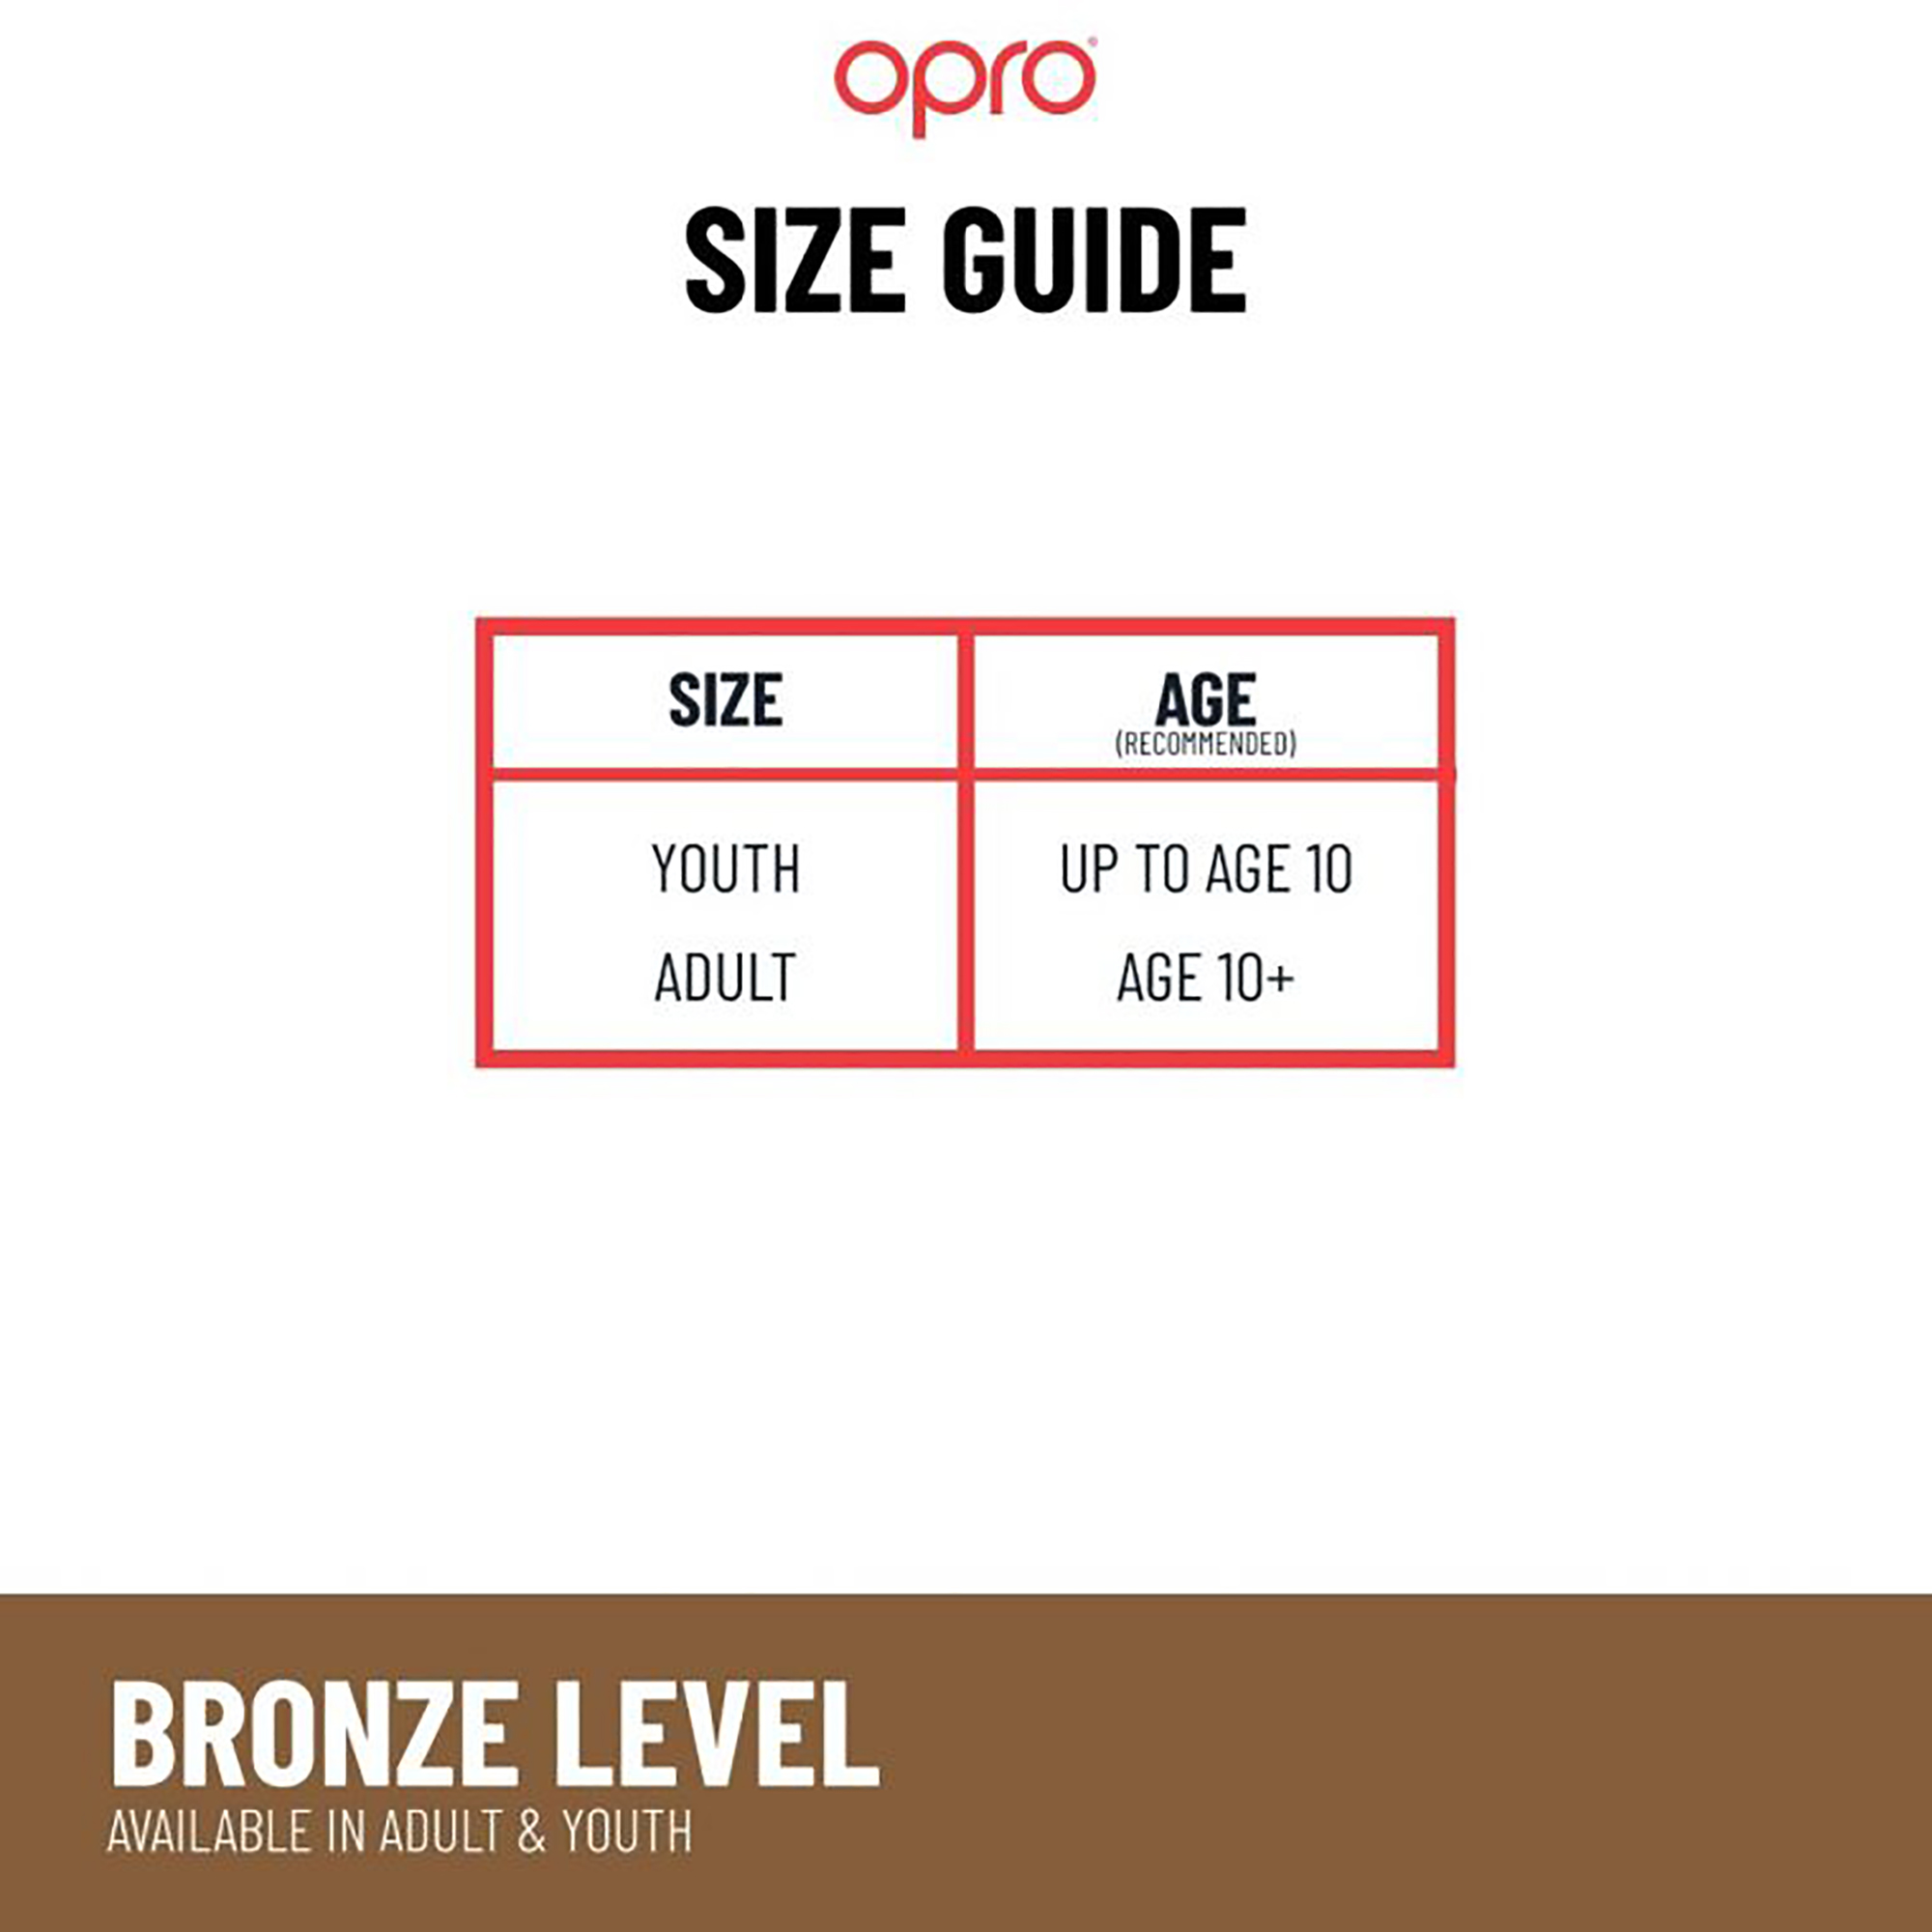 Opro Bronze Enhanced Fit Mundschutz